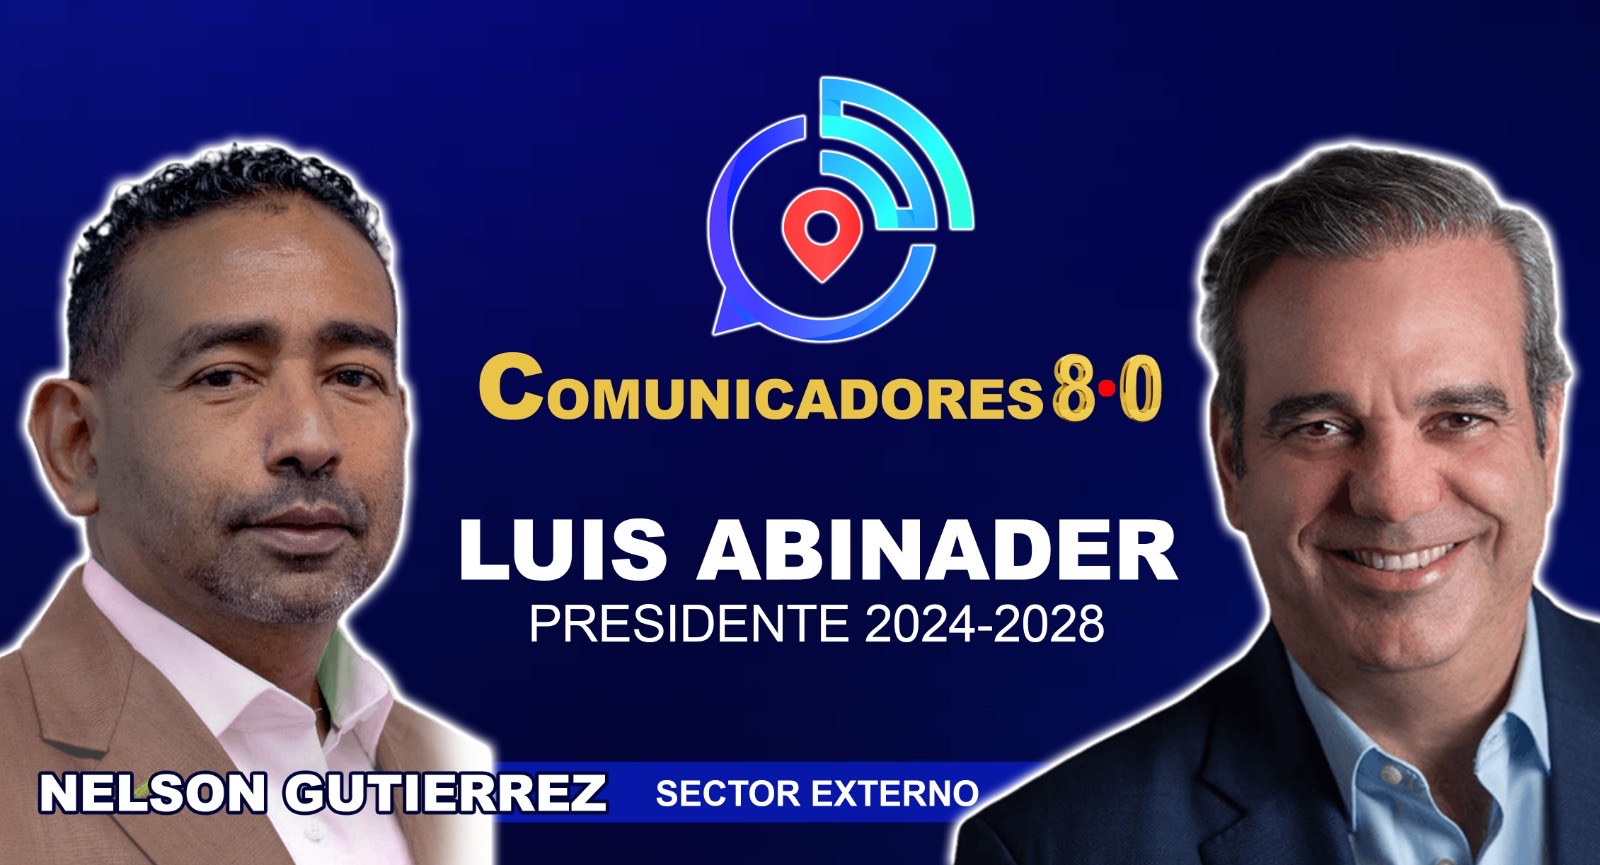 Comunicadores 8.0 Luis Abinader Presidente Juramenta estudiantes de comunicación y equipo de apoyo en Sabana Perdida